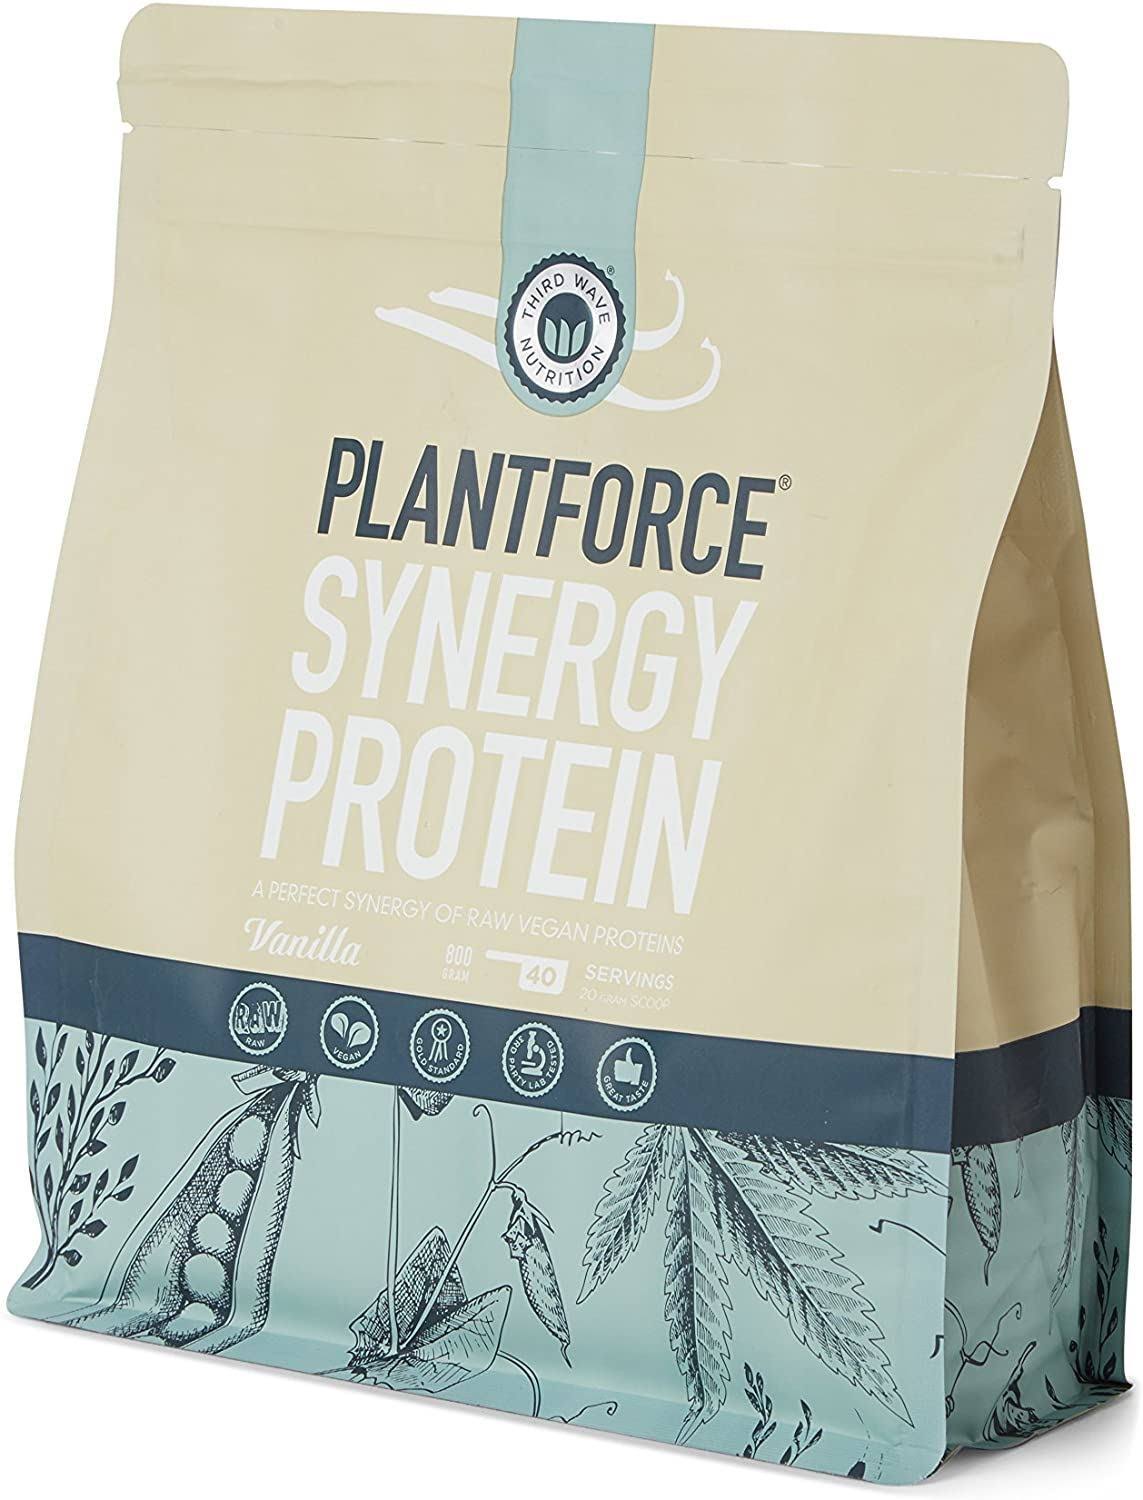 Plantforce Synergy Protein